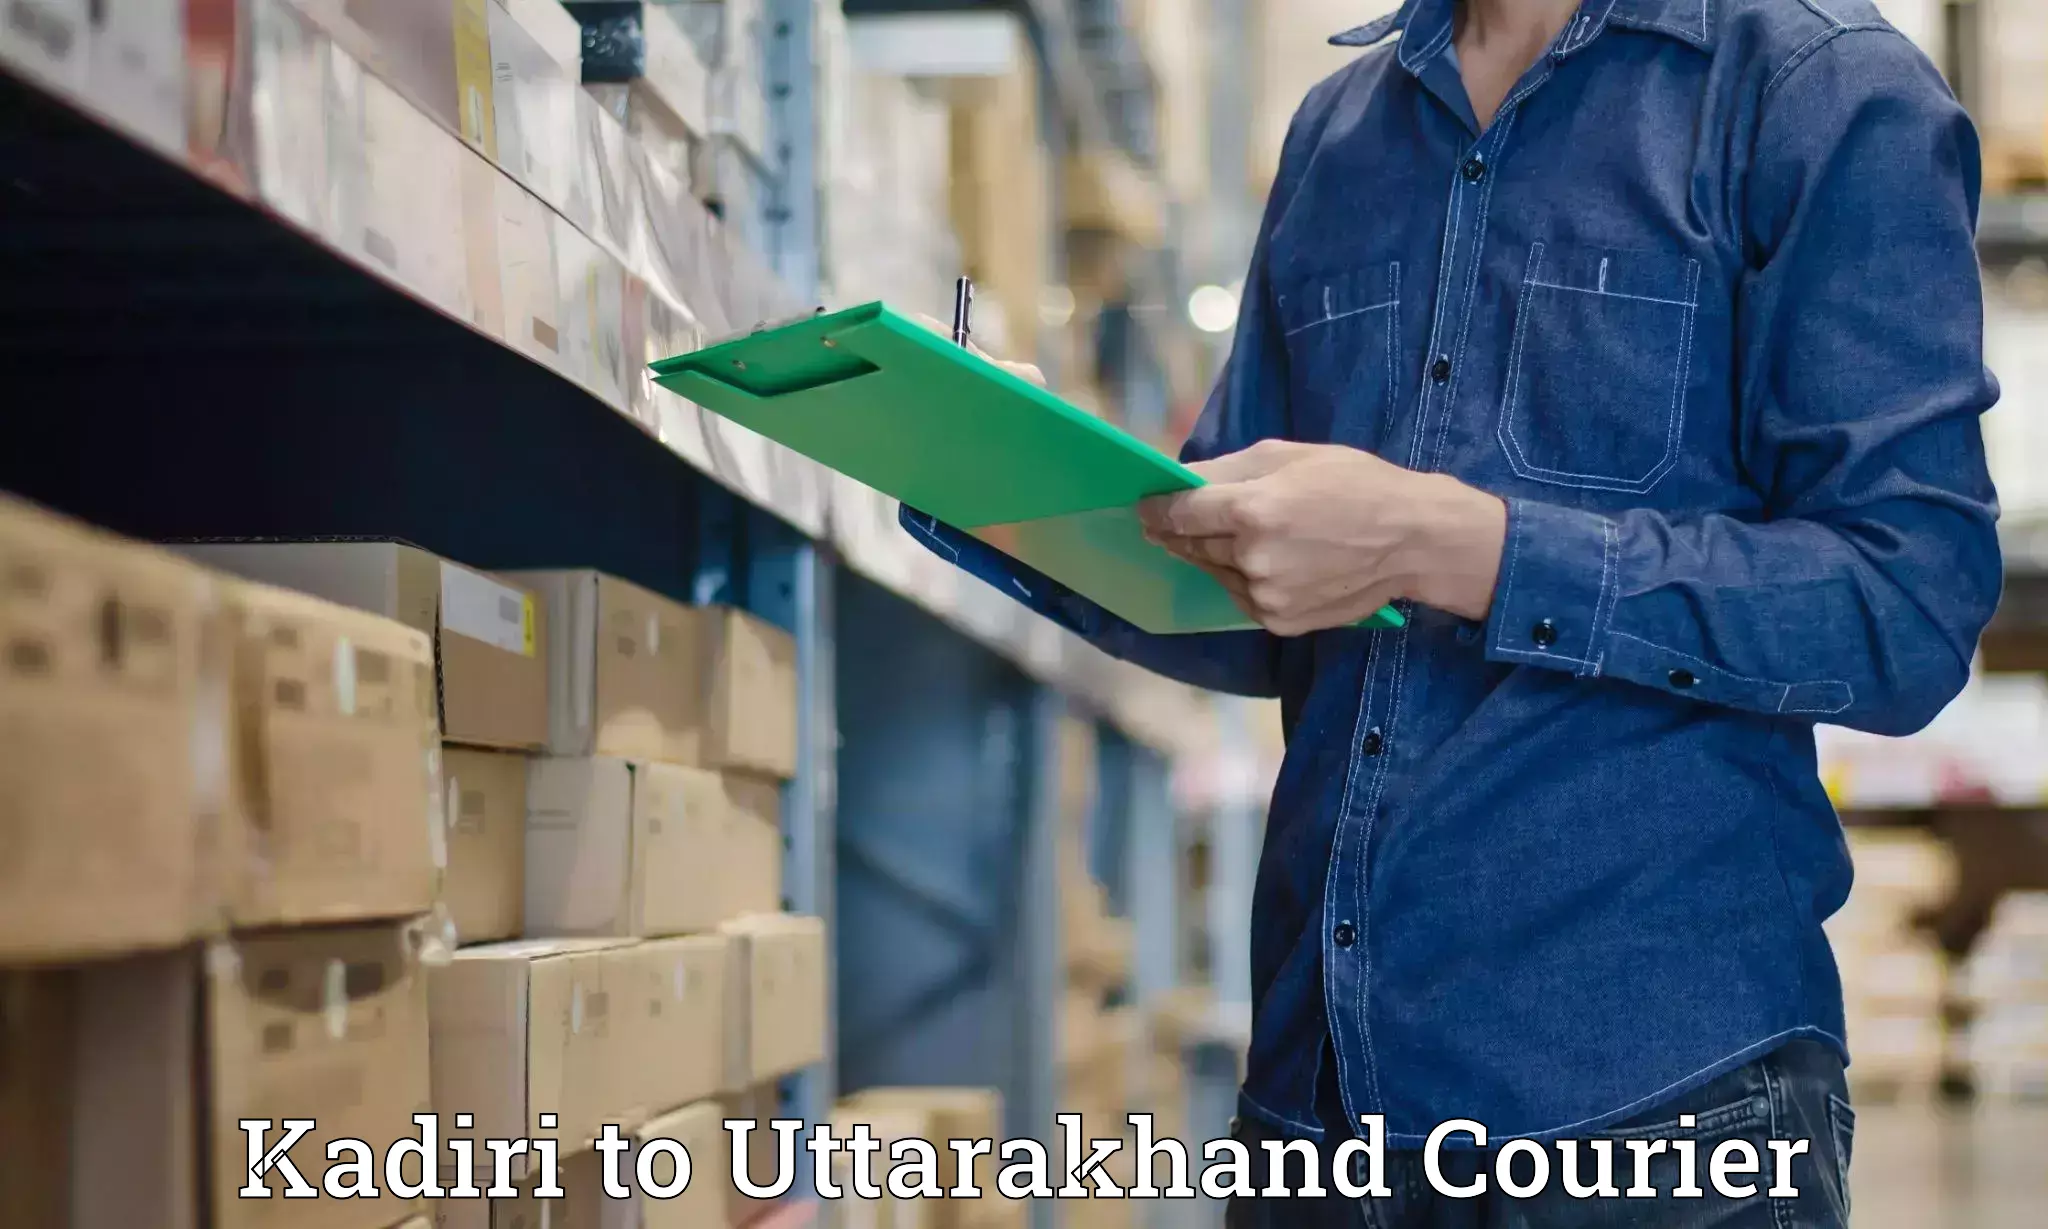 Global logistics network Kadiri to Uttarakhand